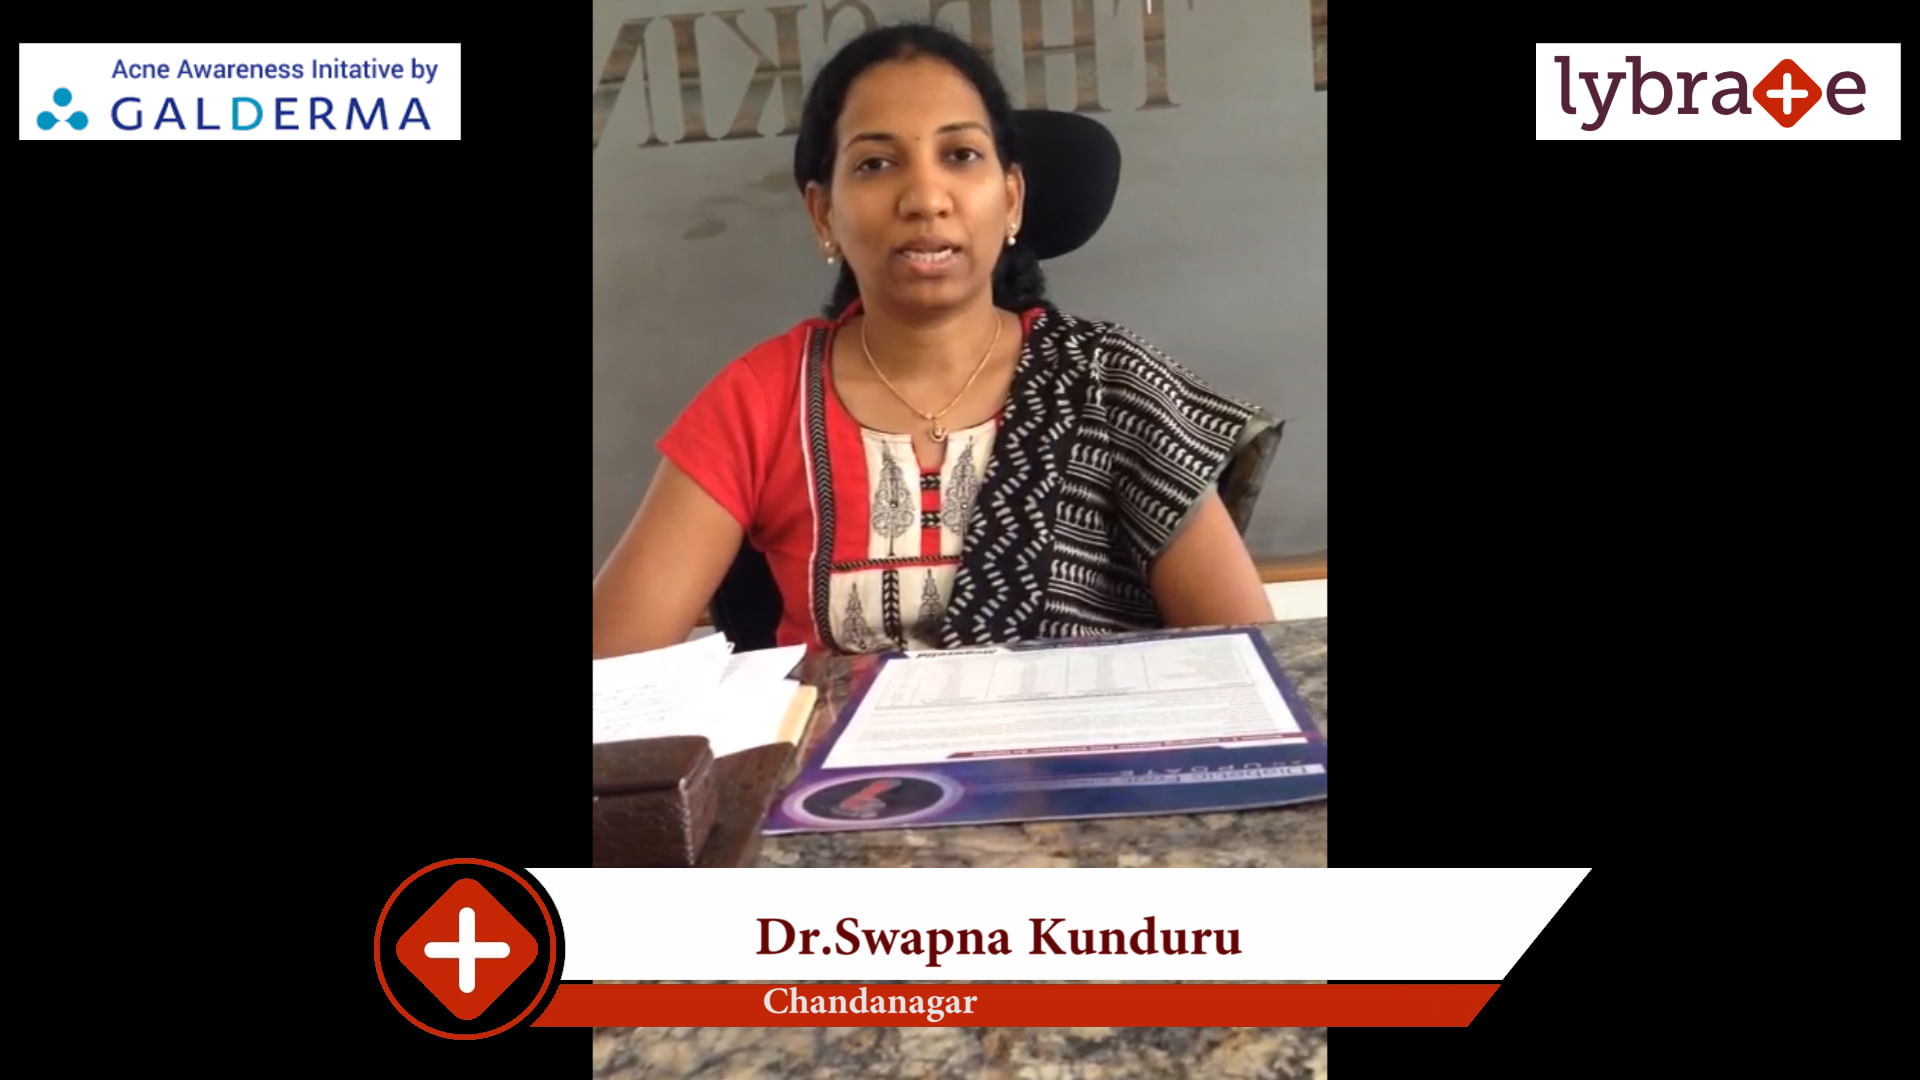 Lybrate | Dr. Swapna Kunduru speaks on IMPORTANCE OF TREATING ACNE EARLY